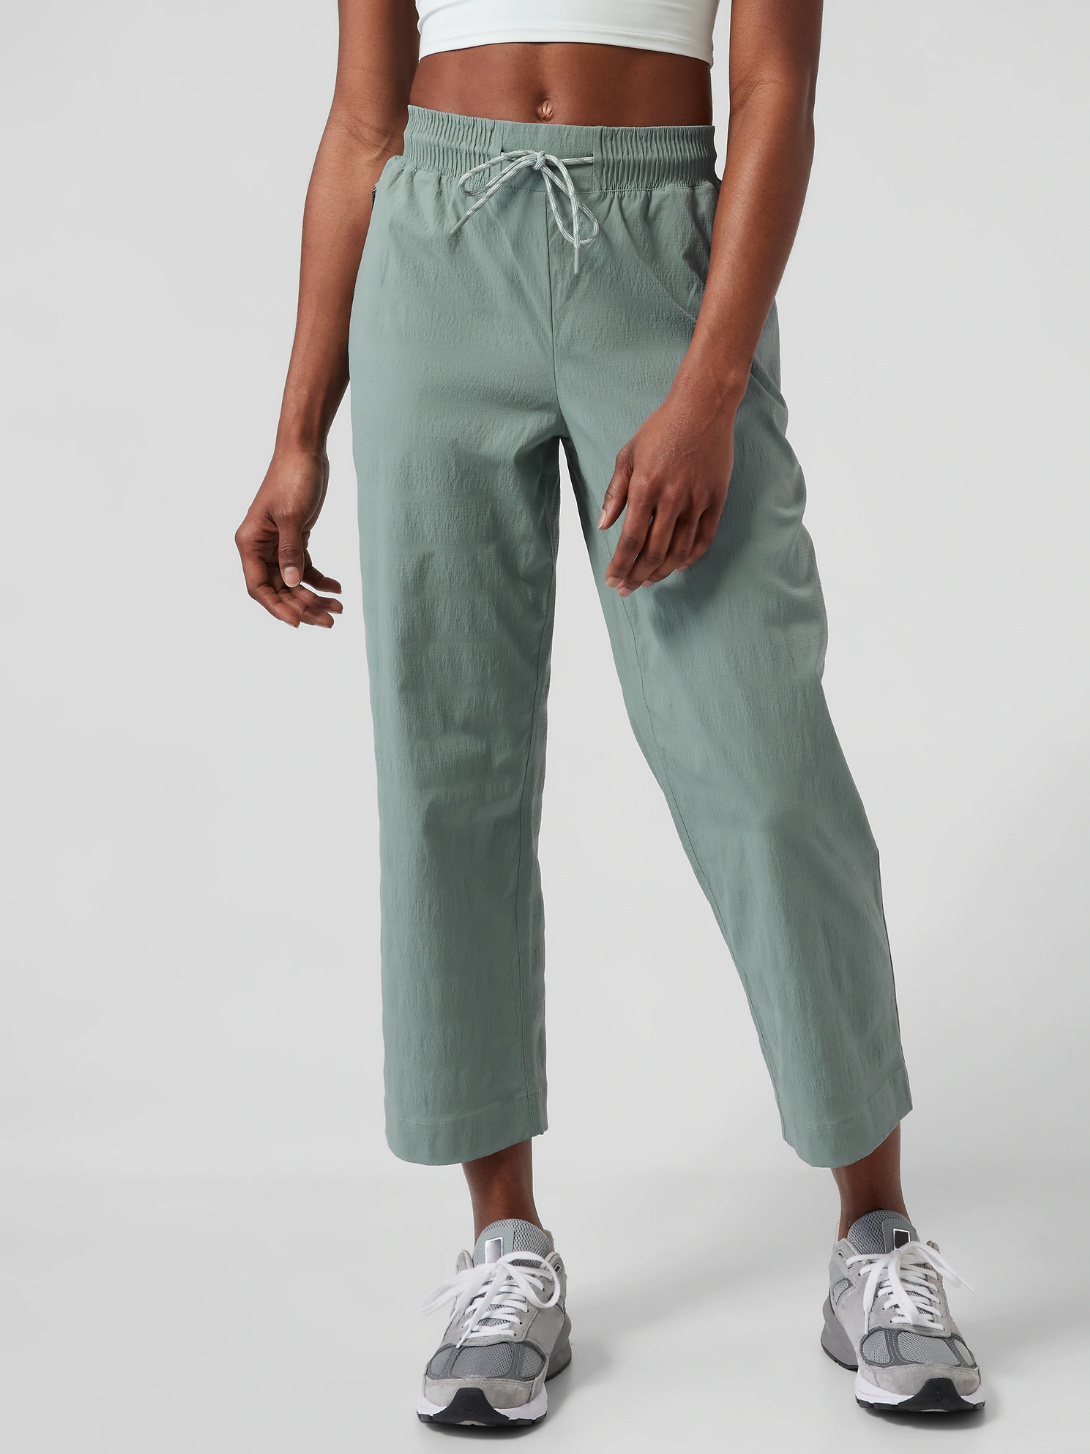 ZUTY Capri Pants for Women Wide Leg Lightweight Quick Dry Comfy Loose Lounge Sweatpants Capris Crop Pants Pockets 